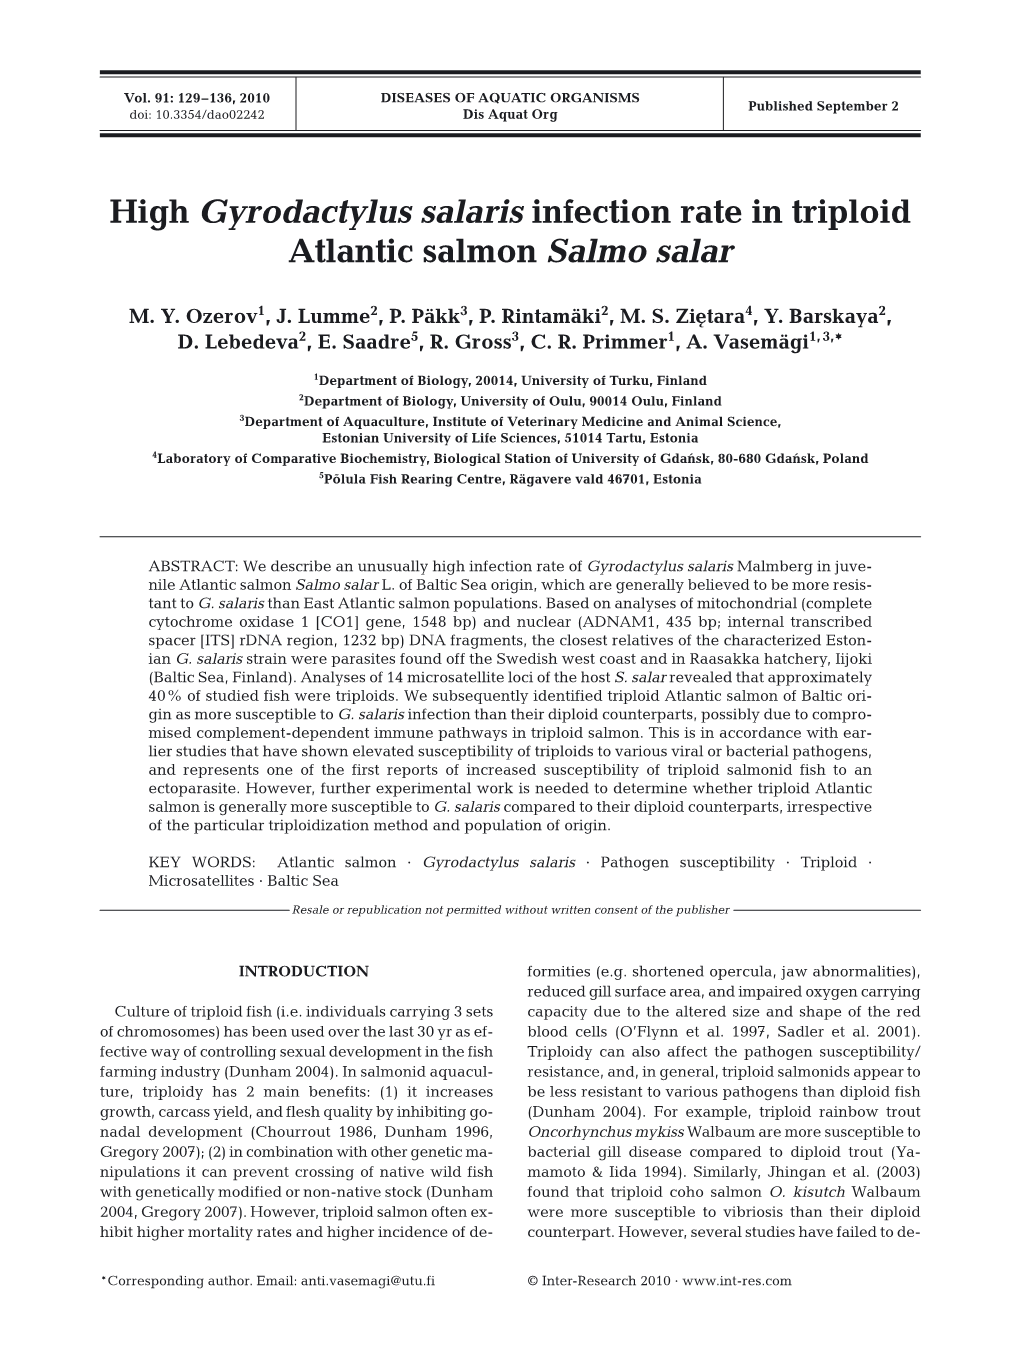 High Gyrodactylus Salaris Infection Rate in Triploid Atlantic Salmon Salmo Salar